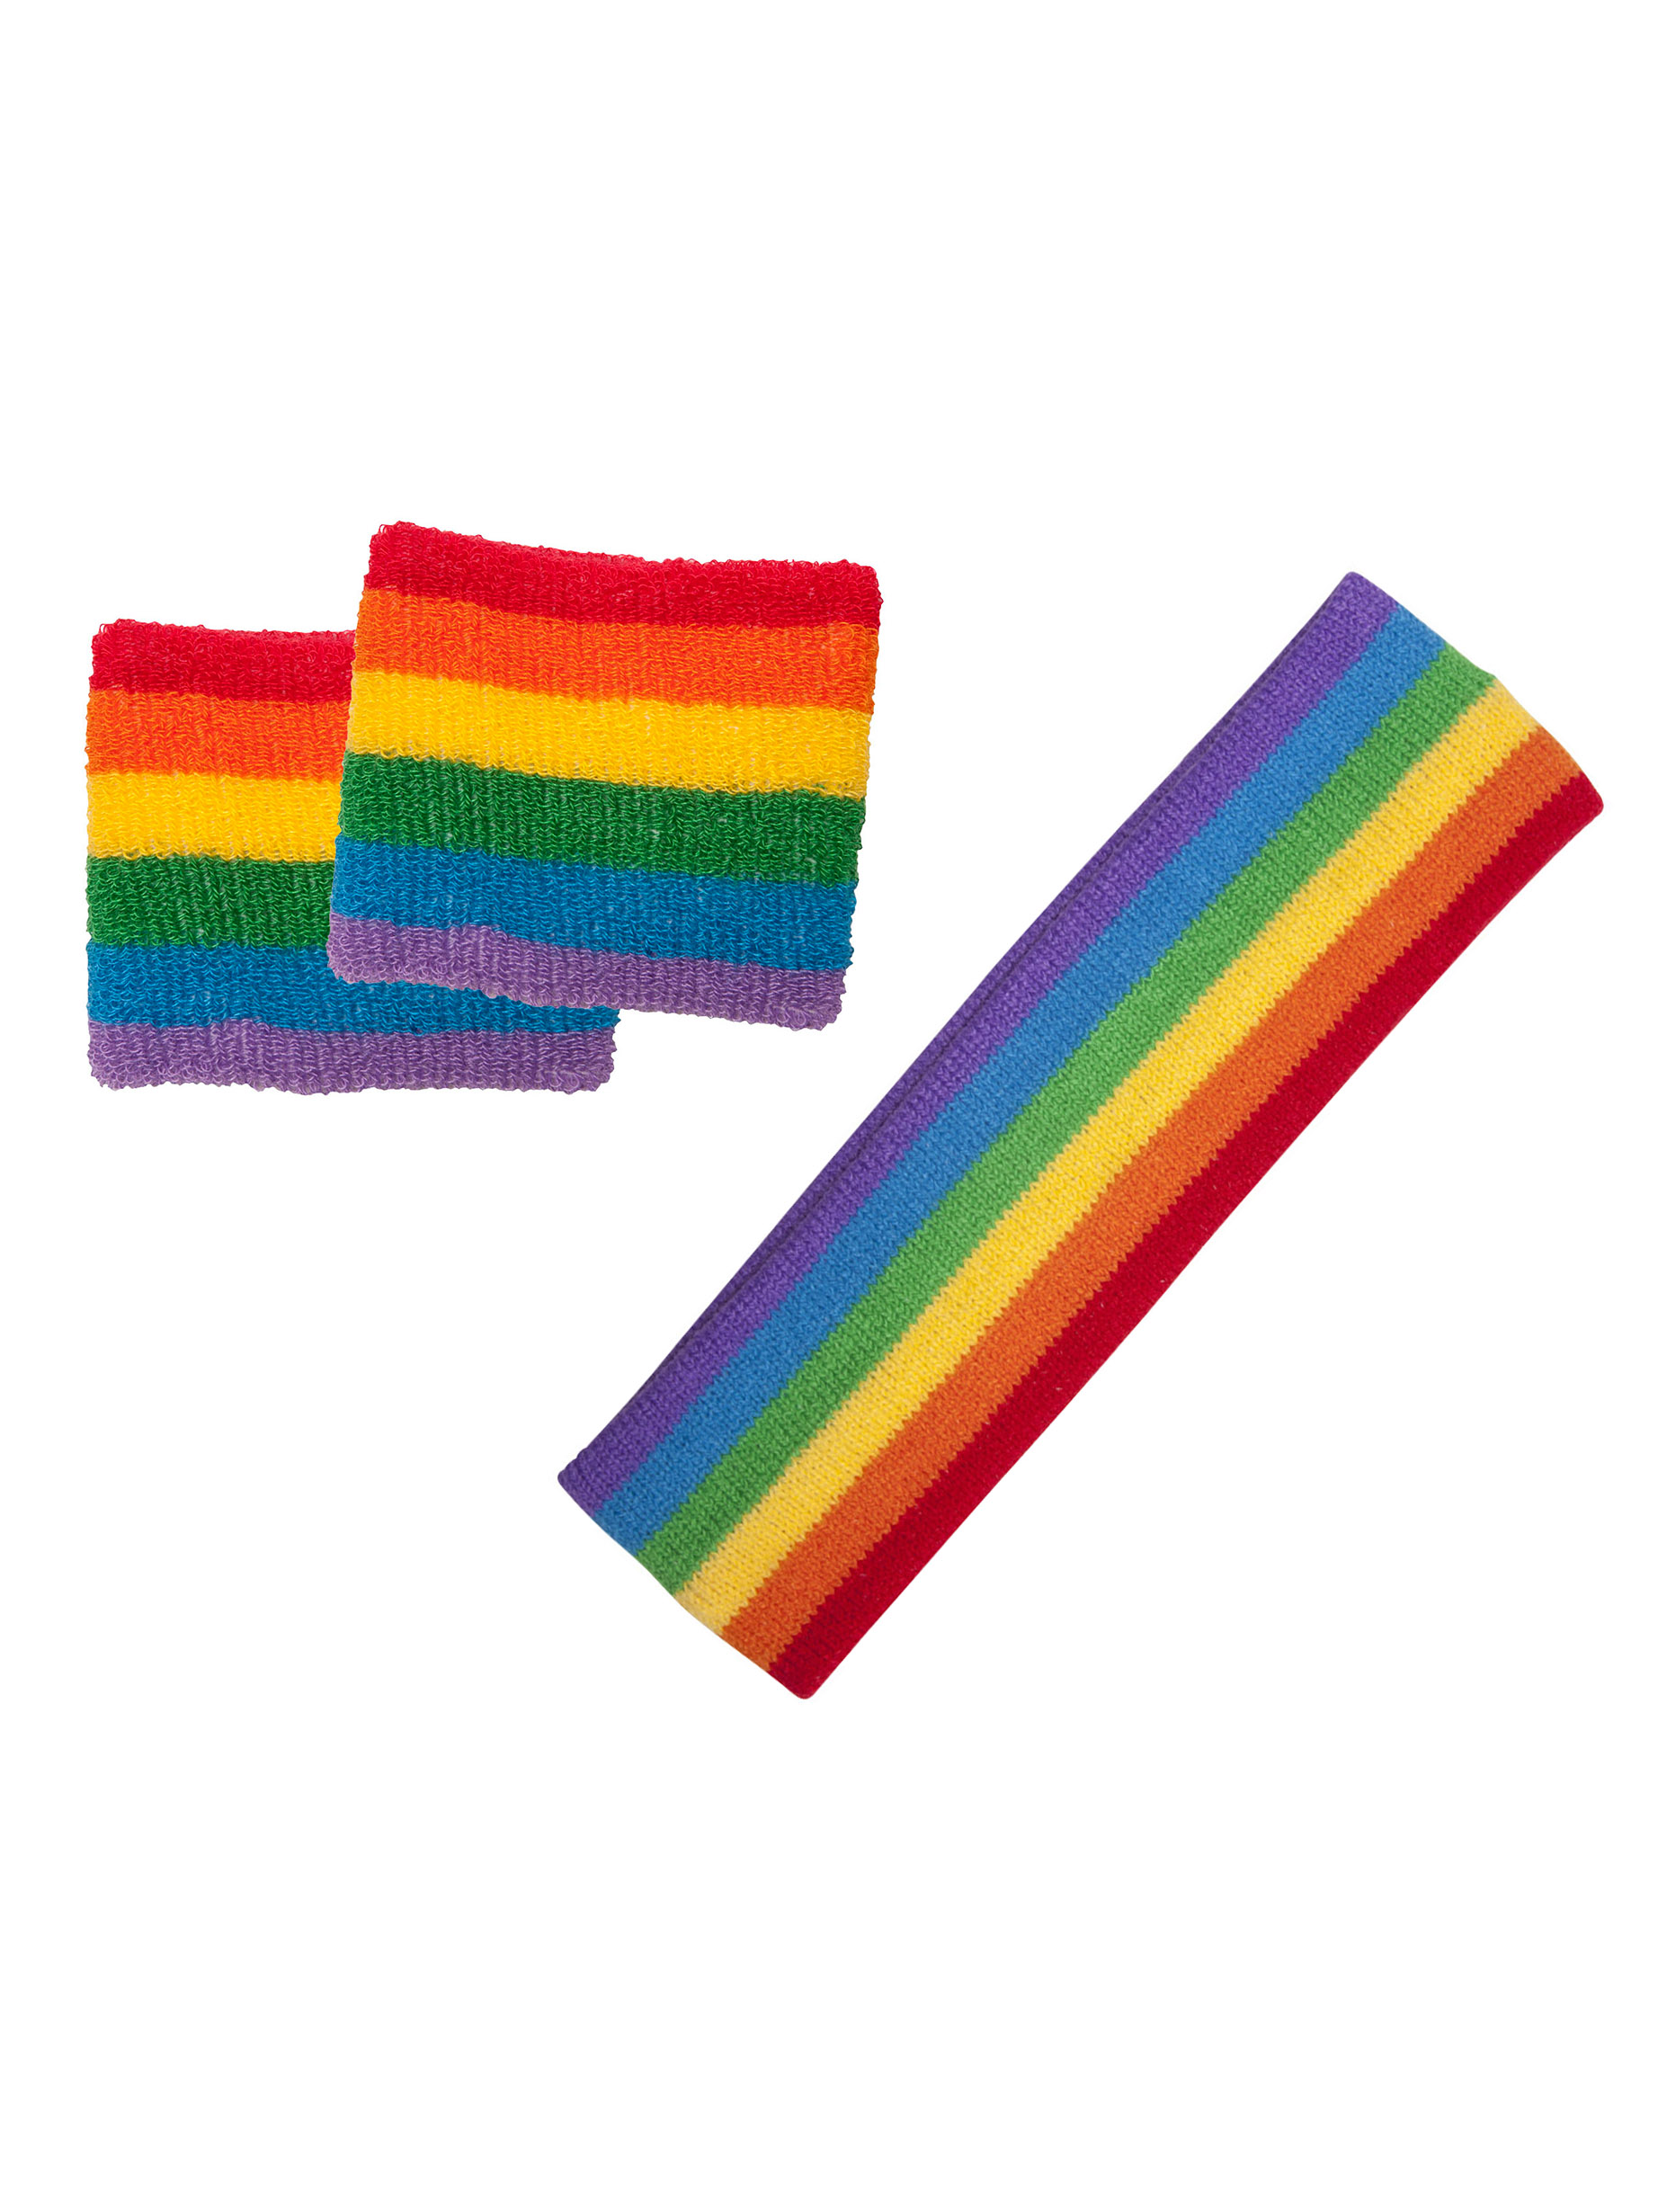 Equality Pride Kit - Headband + Wristbands - image 1 of 4